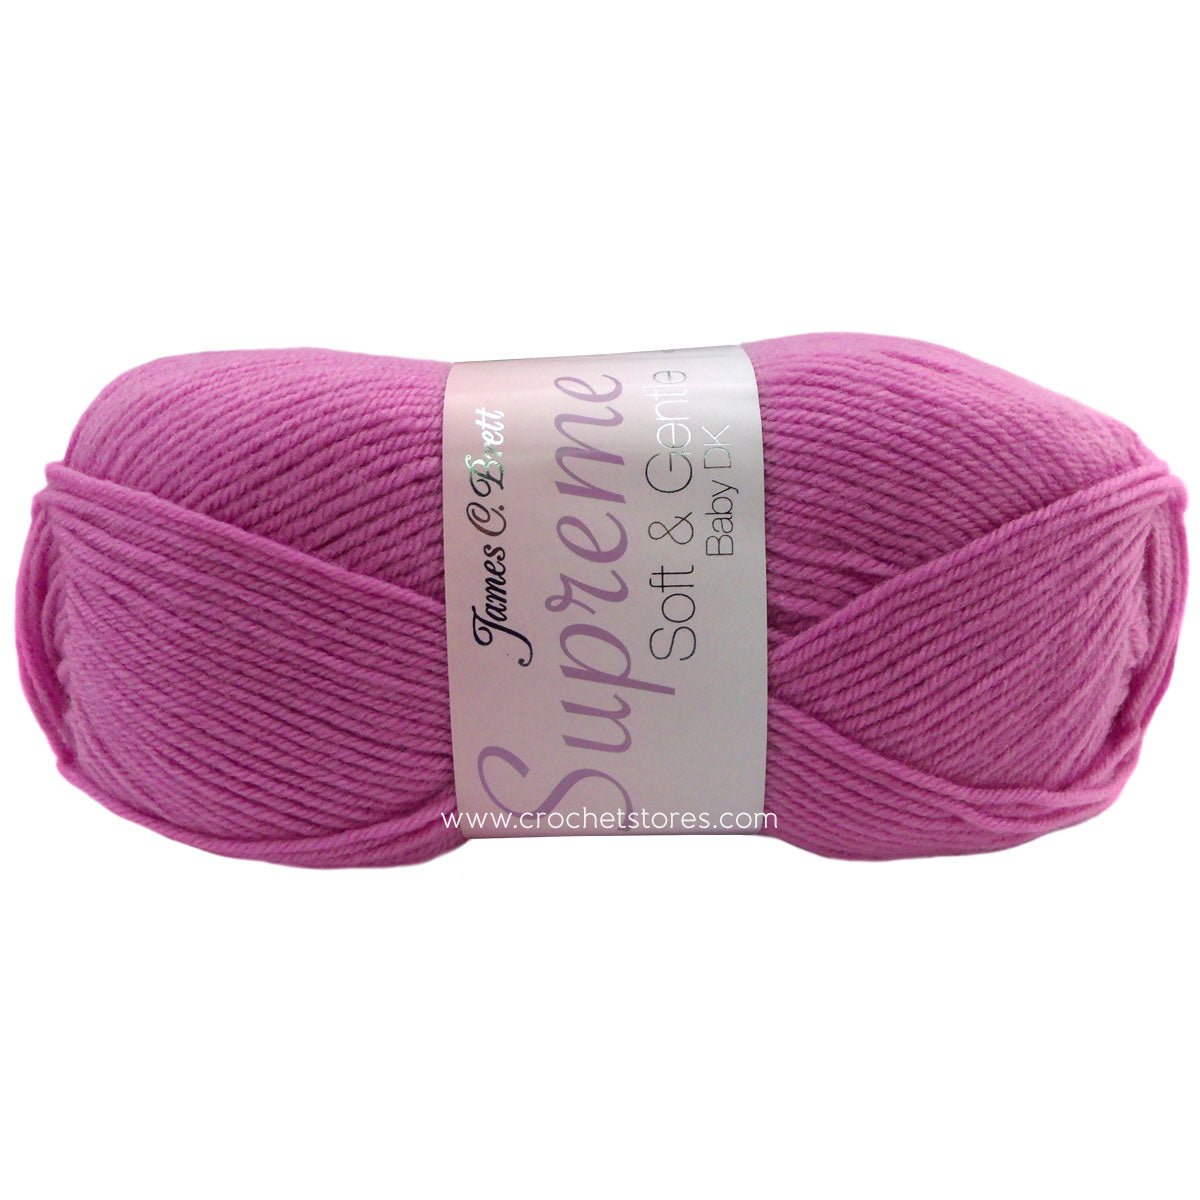 SUPREME BABY DK - CrochetstoresSNG125060019098417